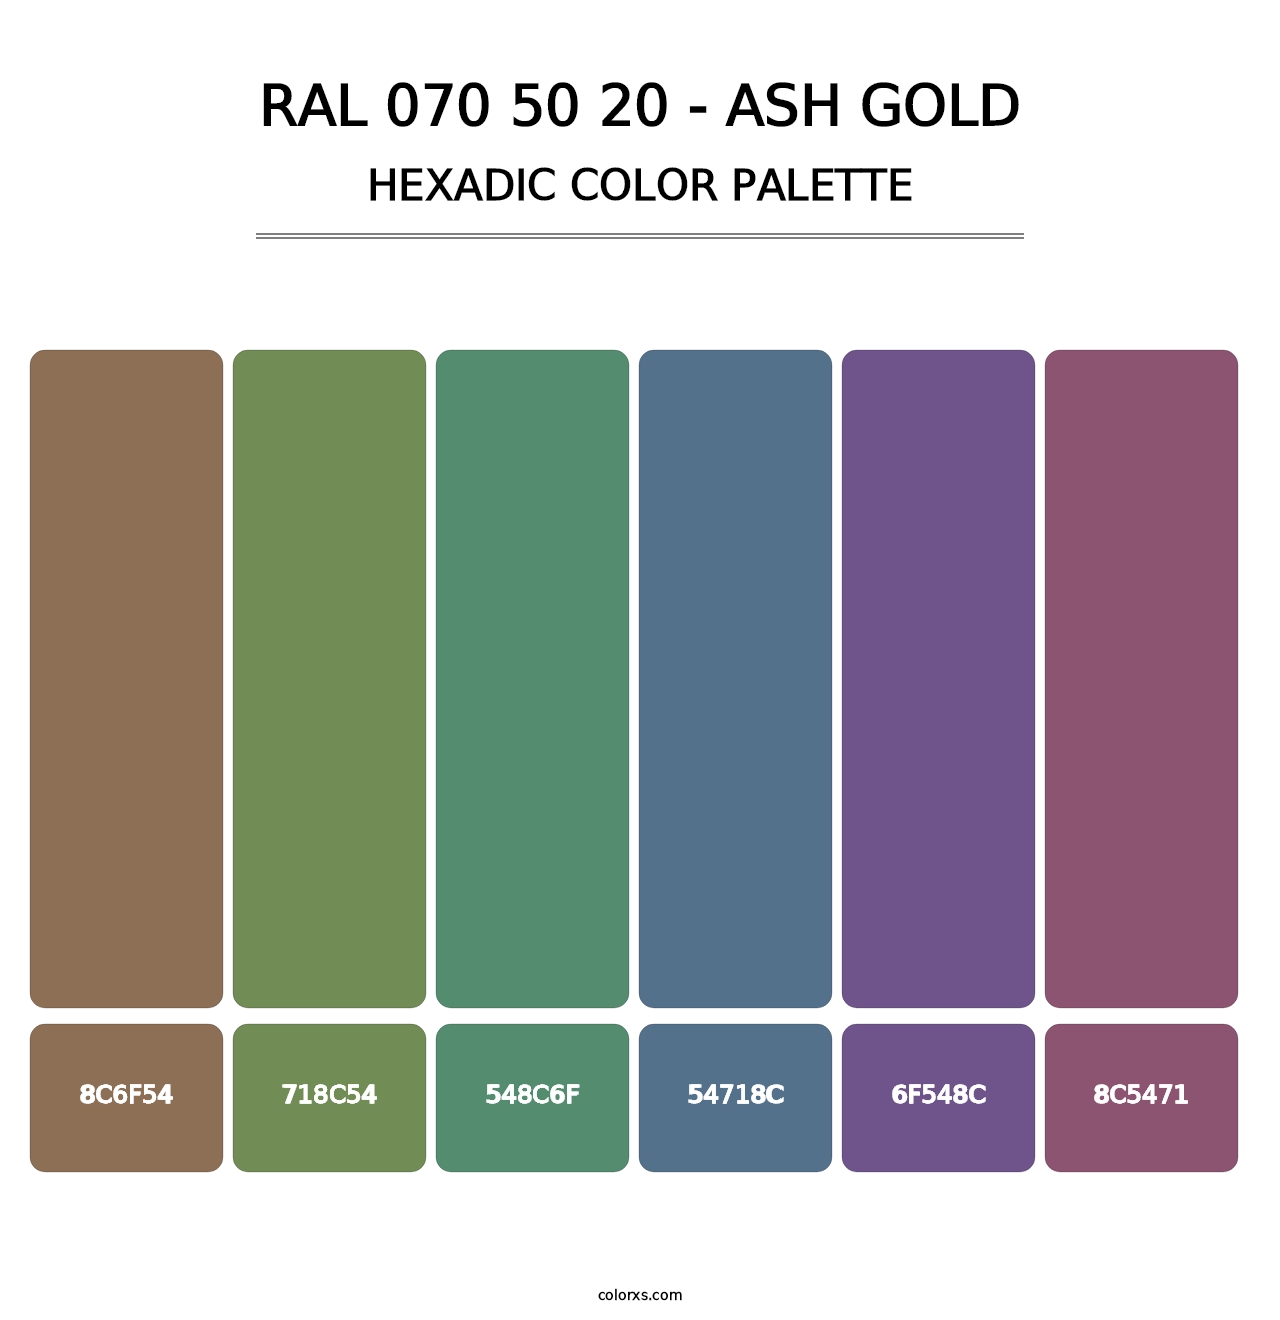 RAL 070 50 20 - Ash Gold - Hexadic Color Palette